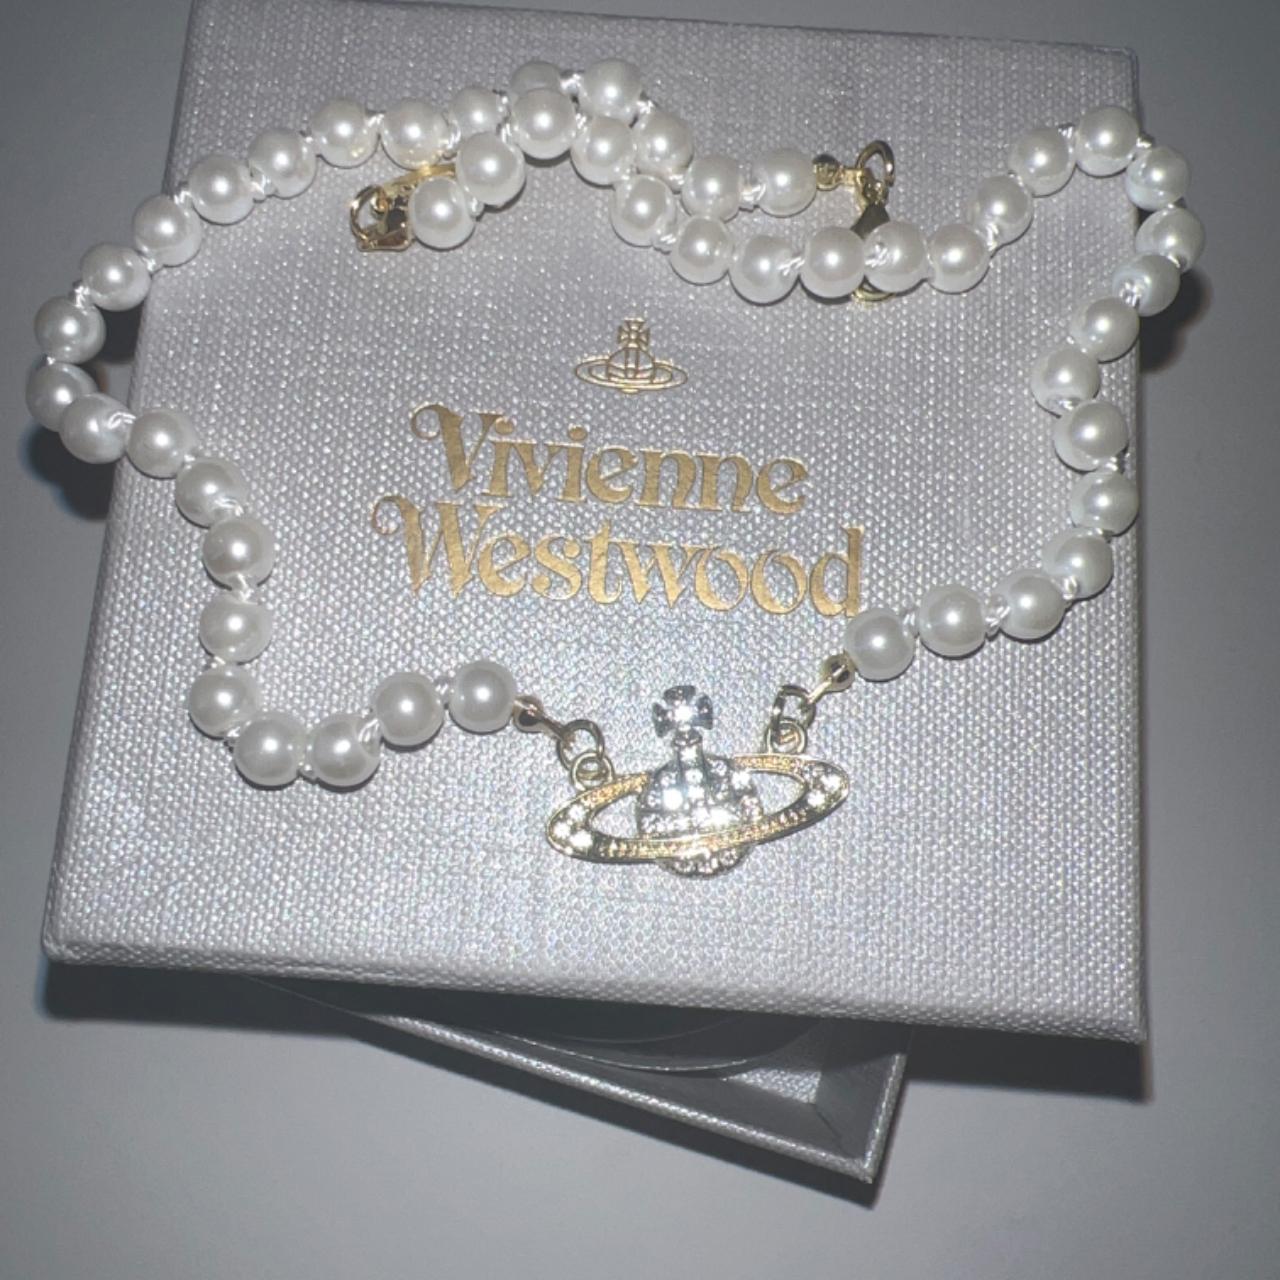 Vivienne Westwood Men's Gold Jewellery | Depop